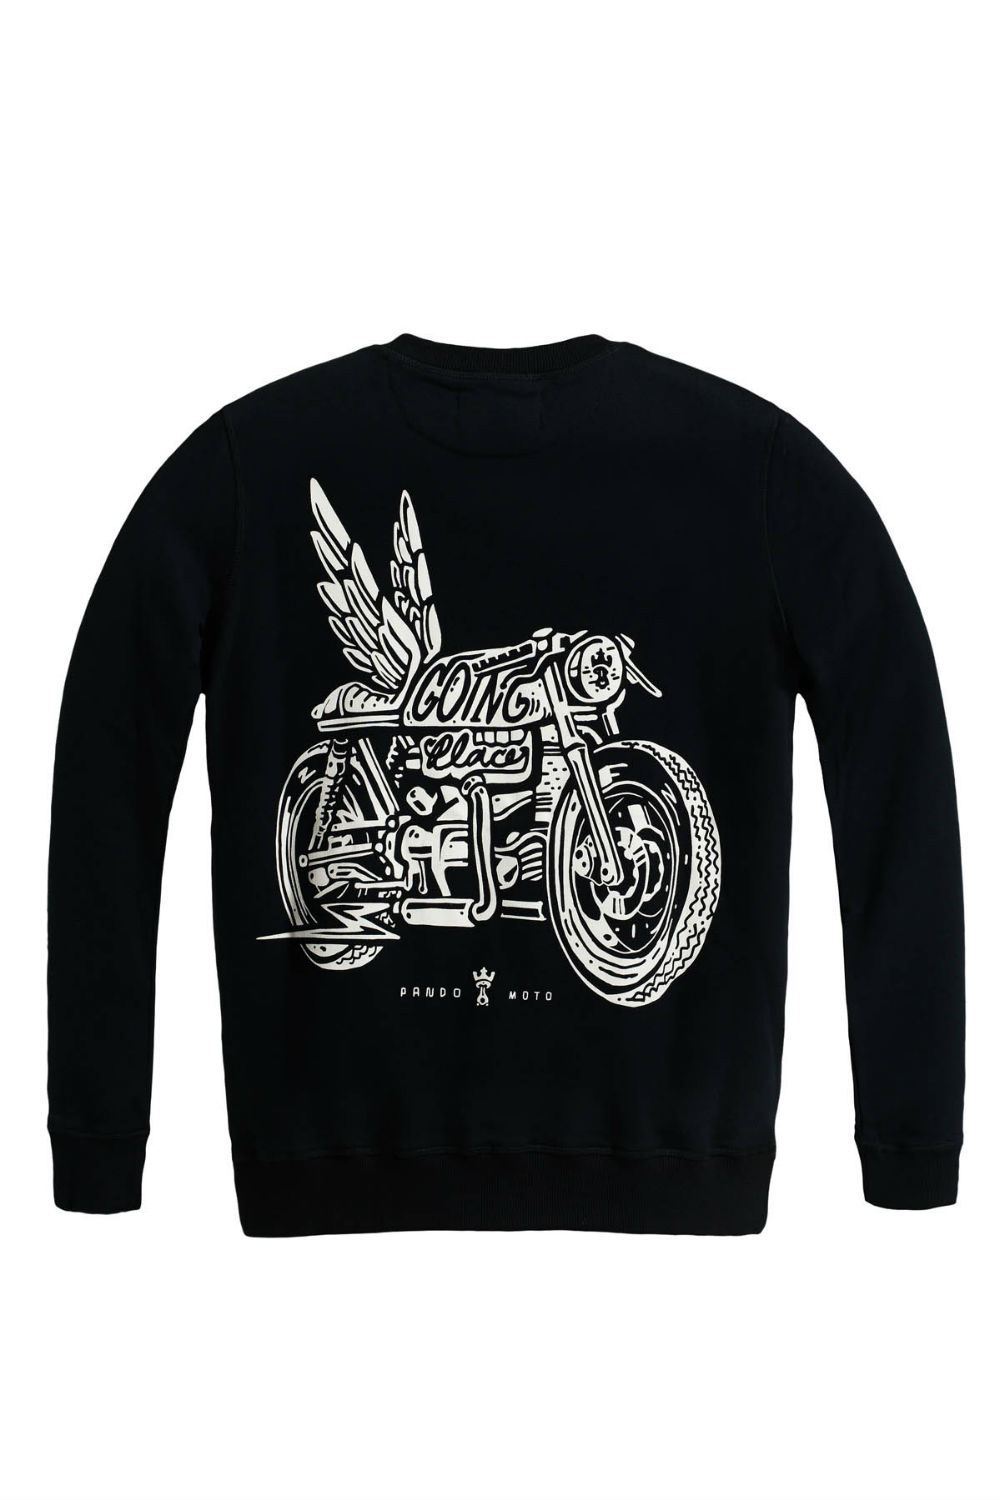 JOHN WING 01 - Biker-Sweatshirt, reguläre Passform, Limited Edition 3